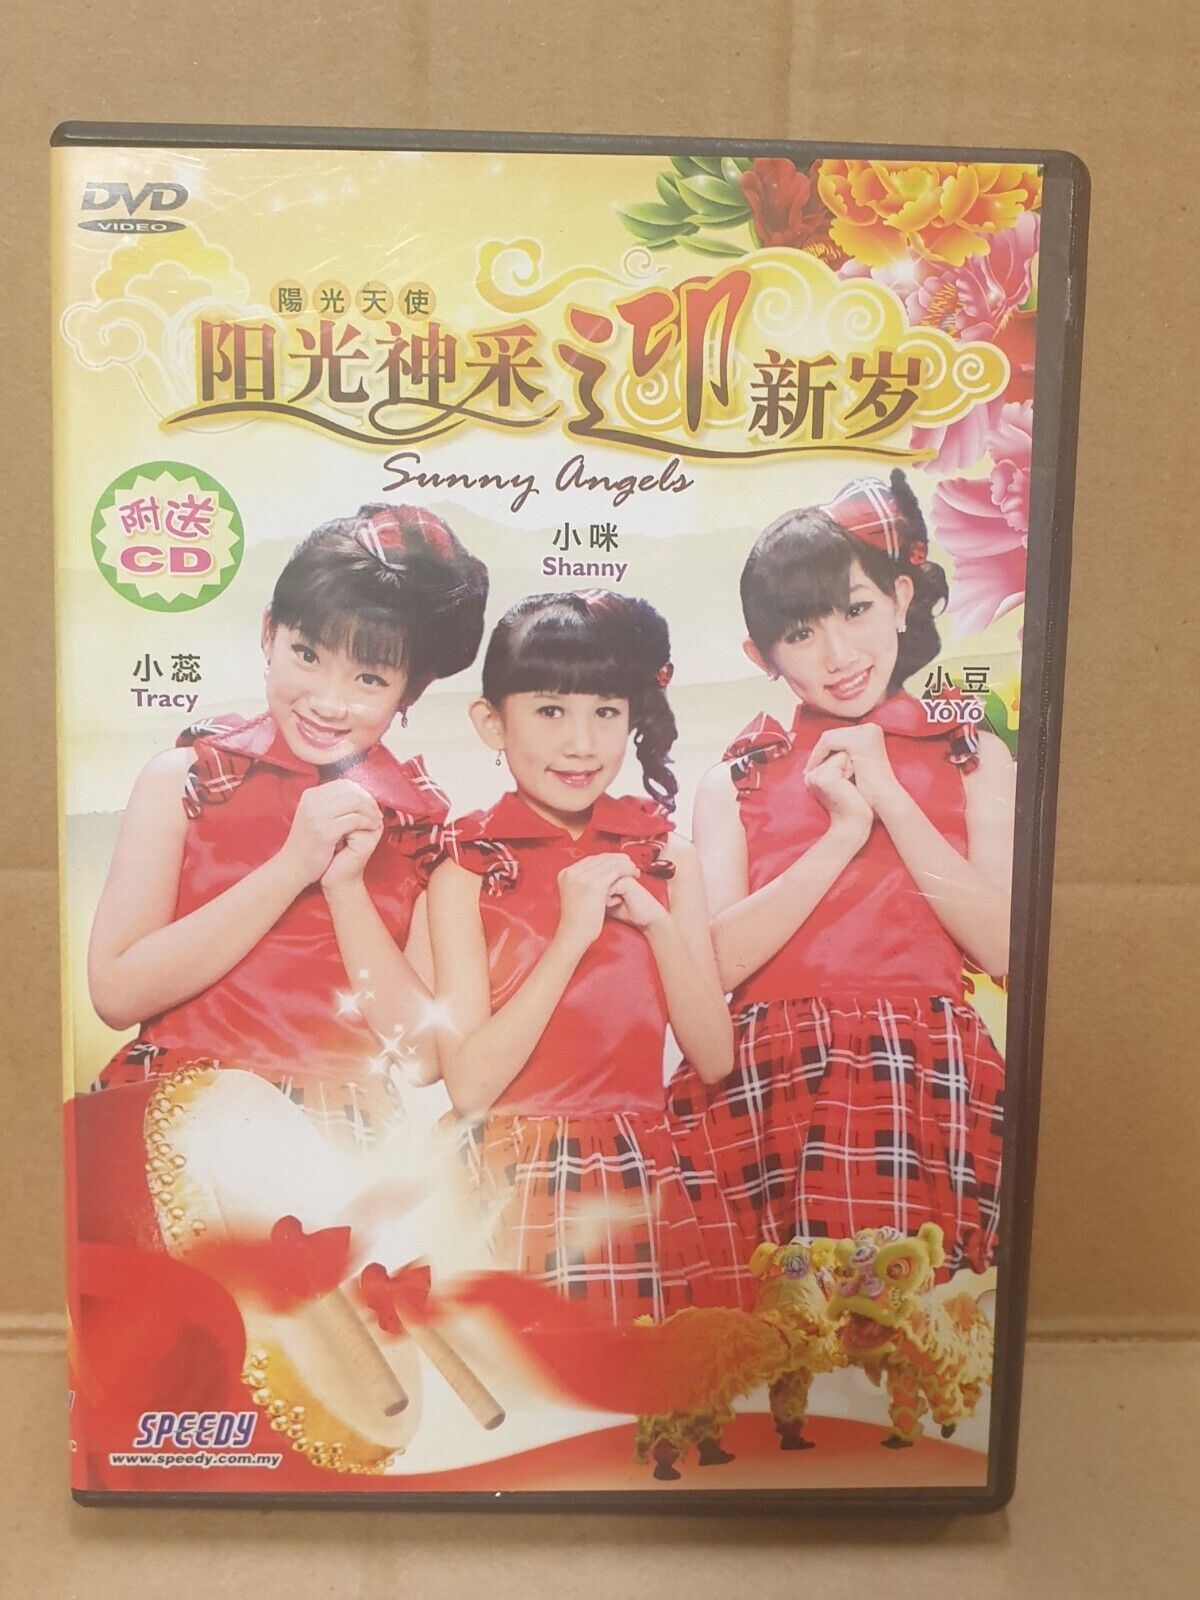 Singapore Sunny Angels 阳光天使 Teen Girl Group New Year Chinese CD + DVD (FCB2396)